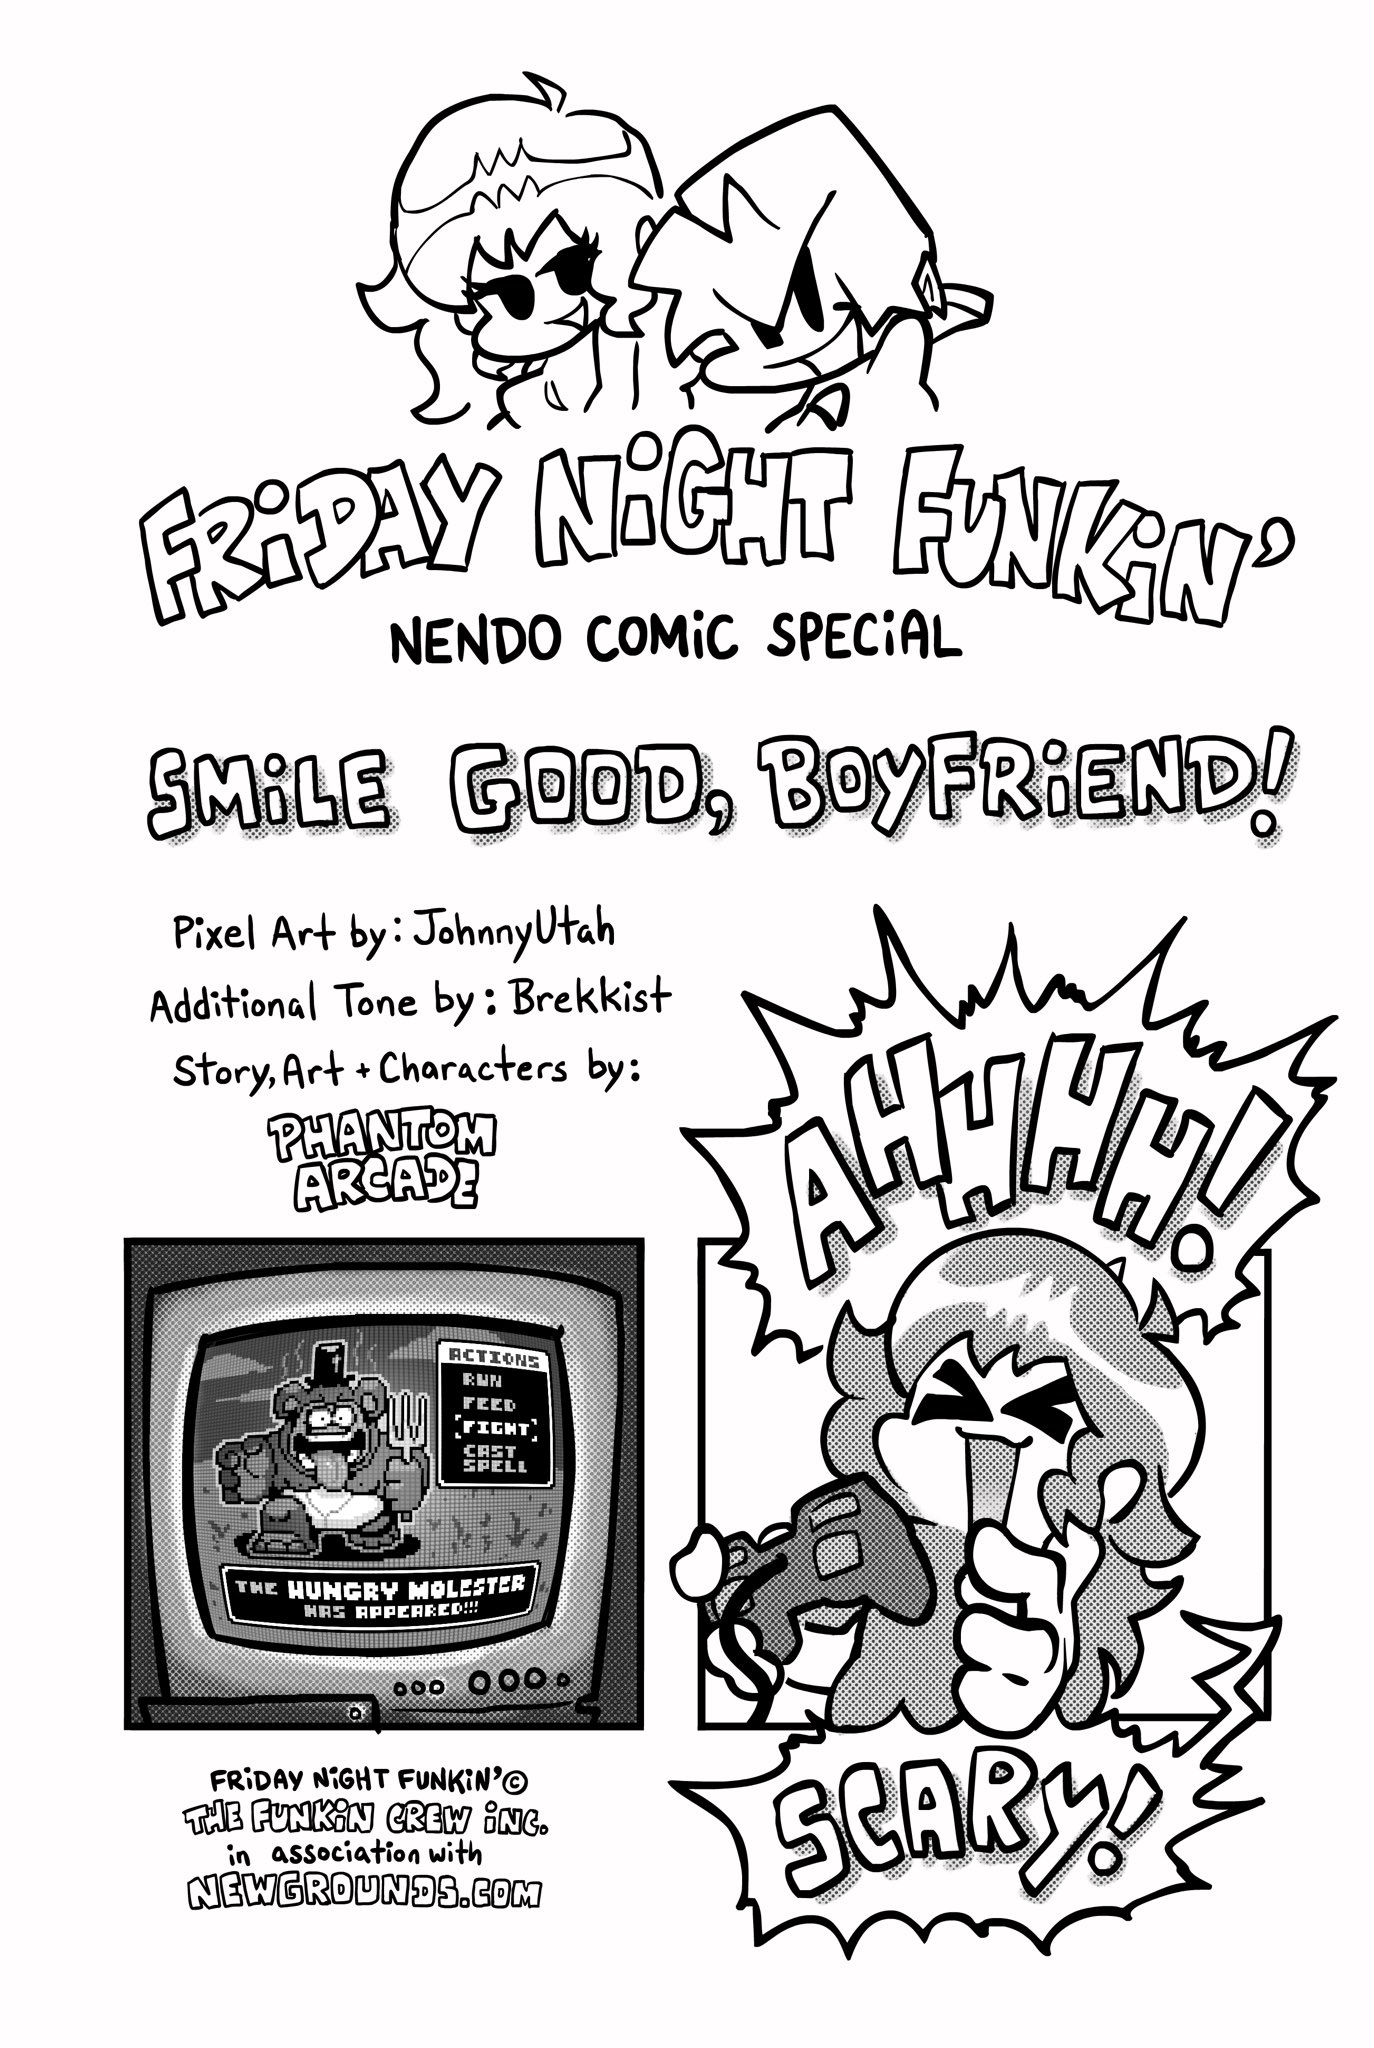 Friday Night Funkin' by ninjamuffin99, PhantomArcade, The Funkin' Crew, Inc.